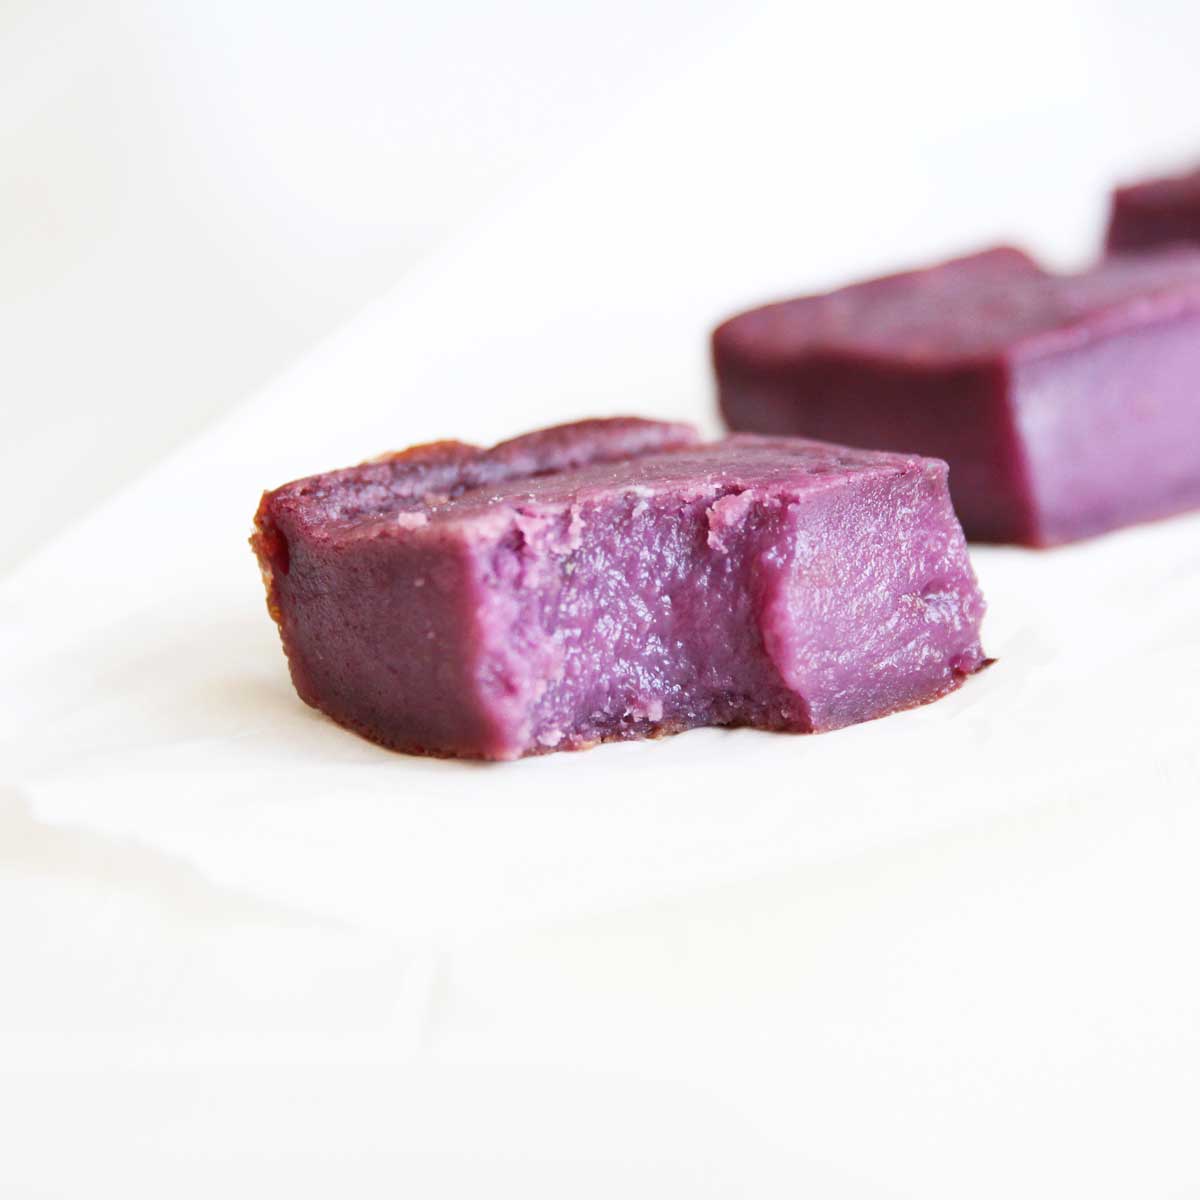 mochi cake - ube purple sweet potato